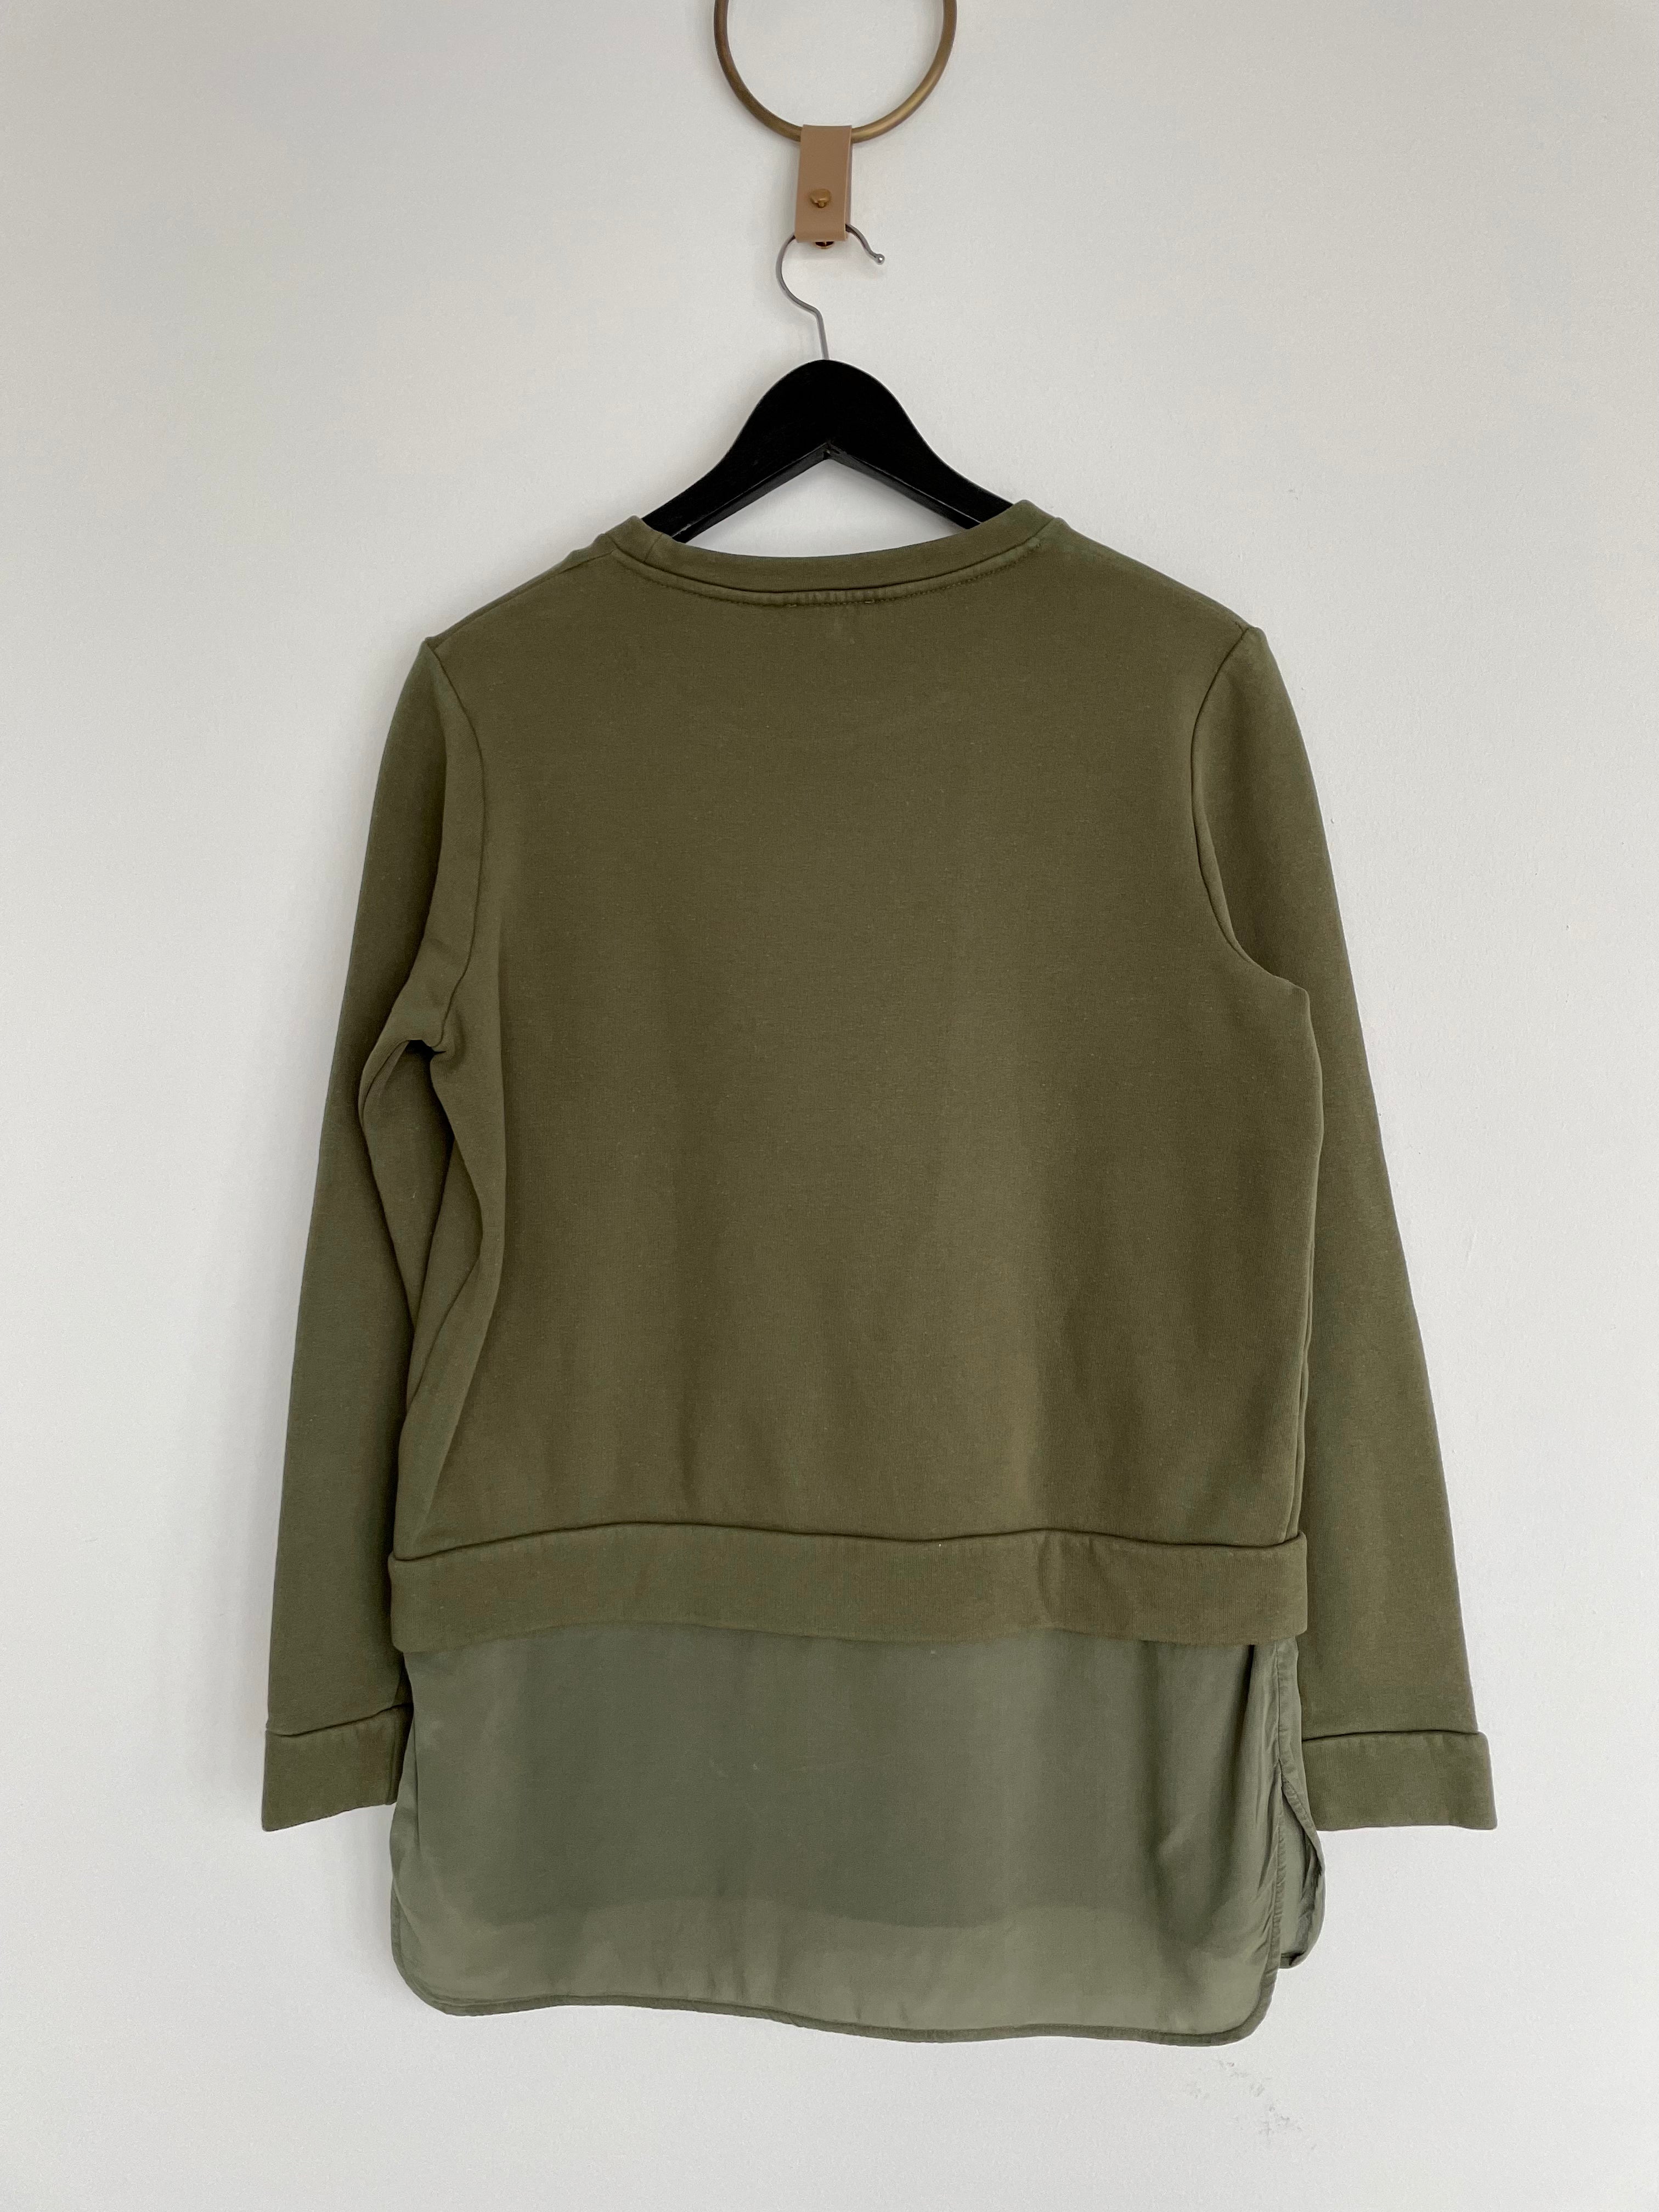 Khaki sweater - COS - S